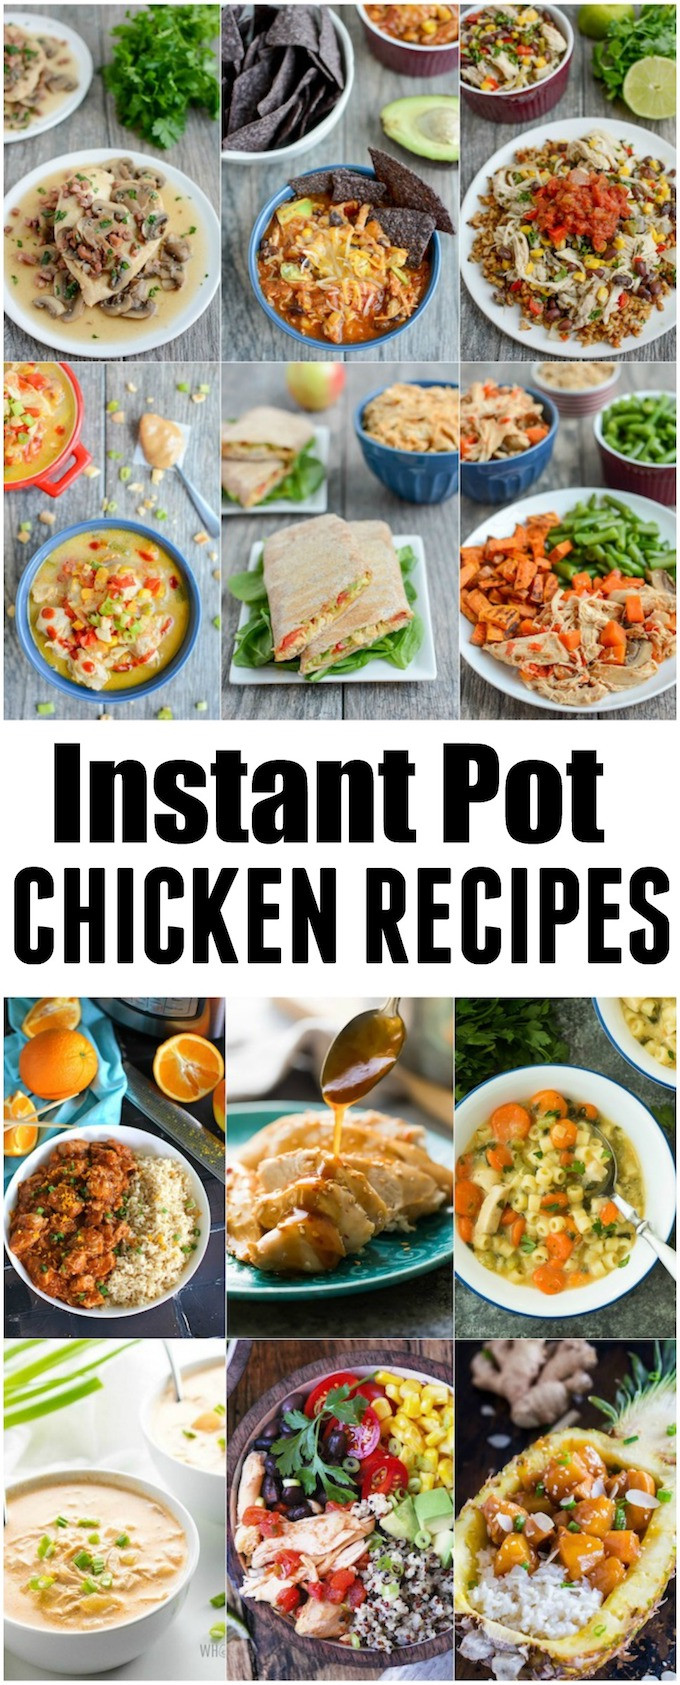 Instant Pot Healthy Chicken Recipes
 Instant Pot Chicken Recipes